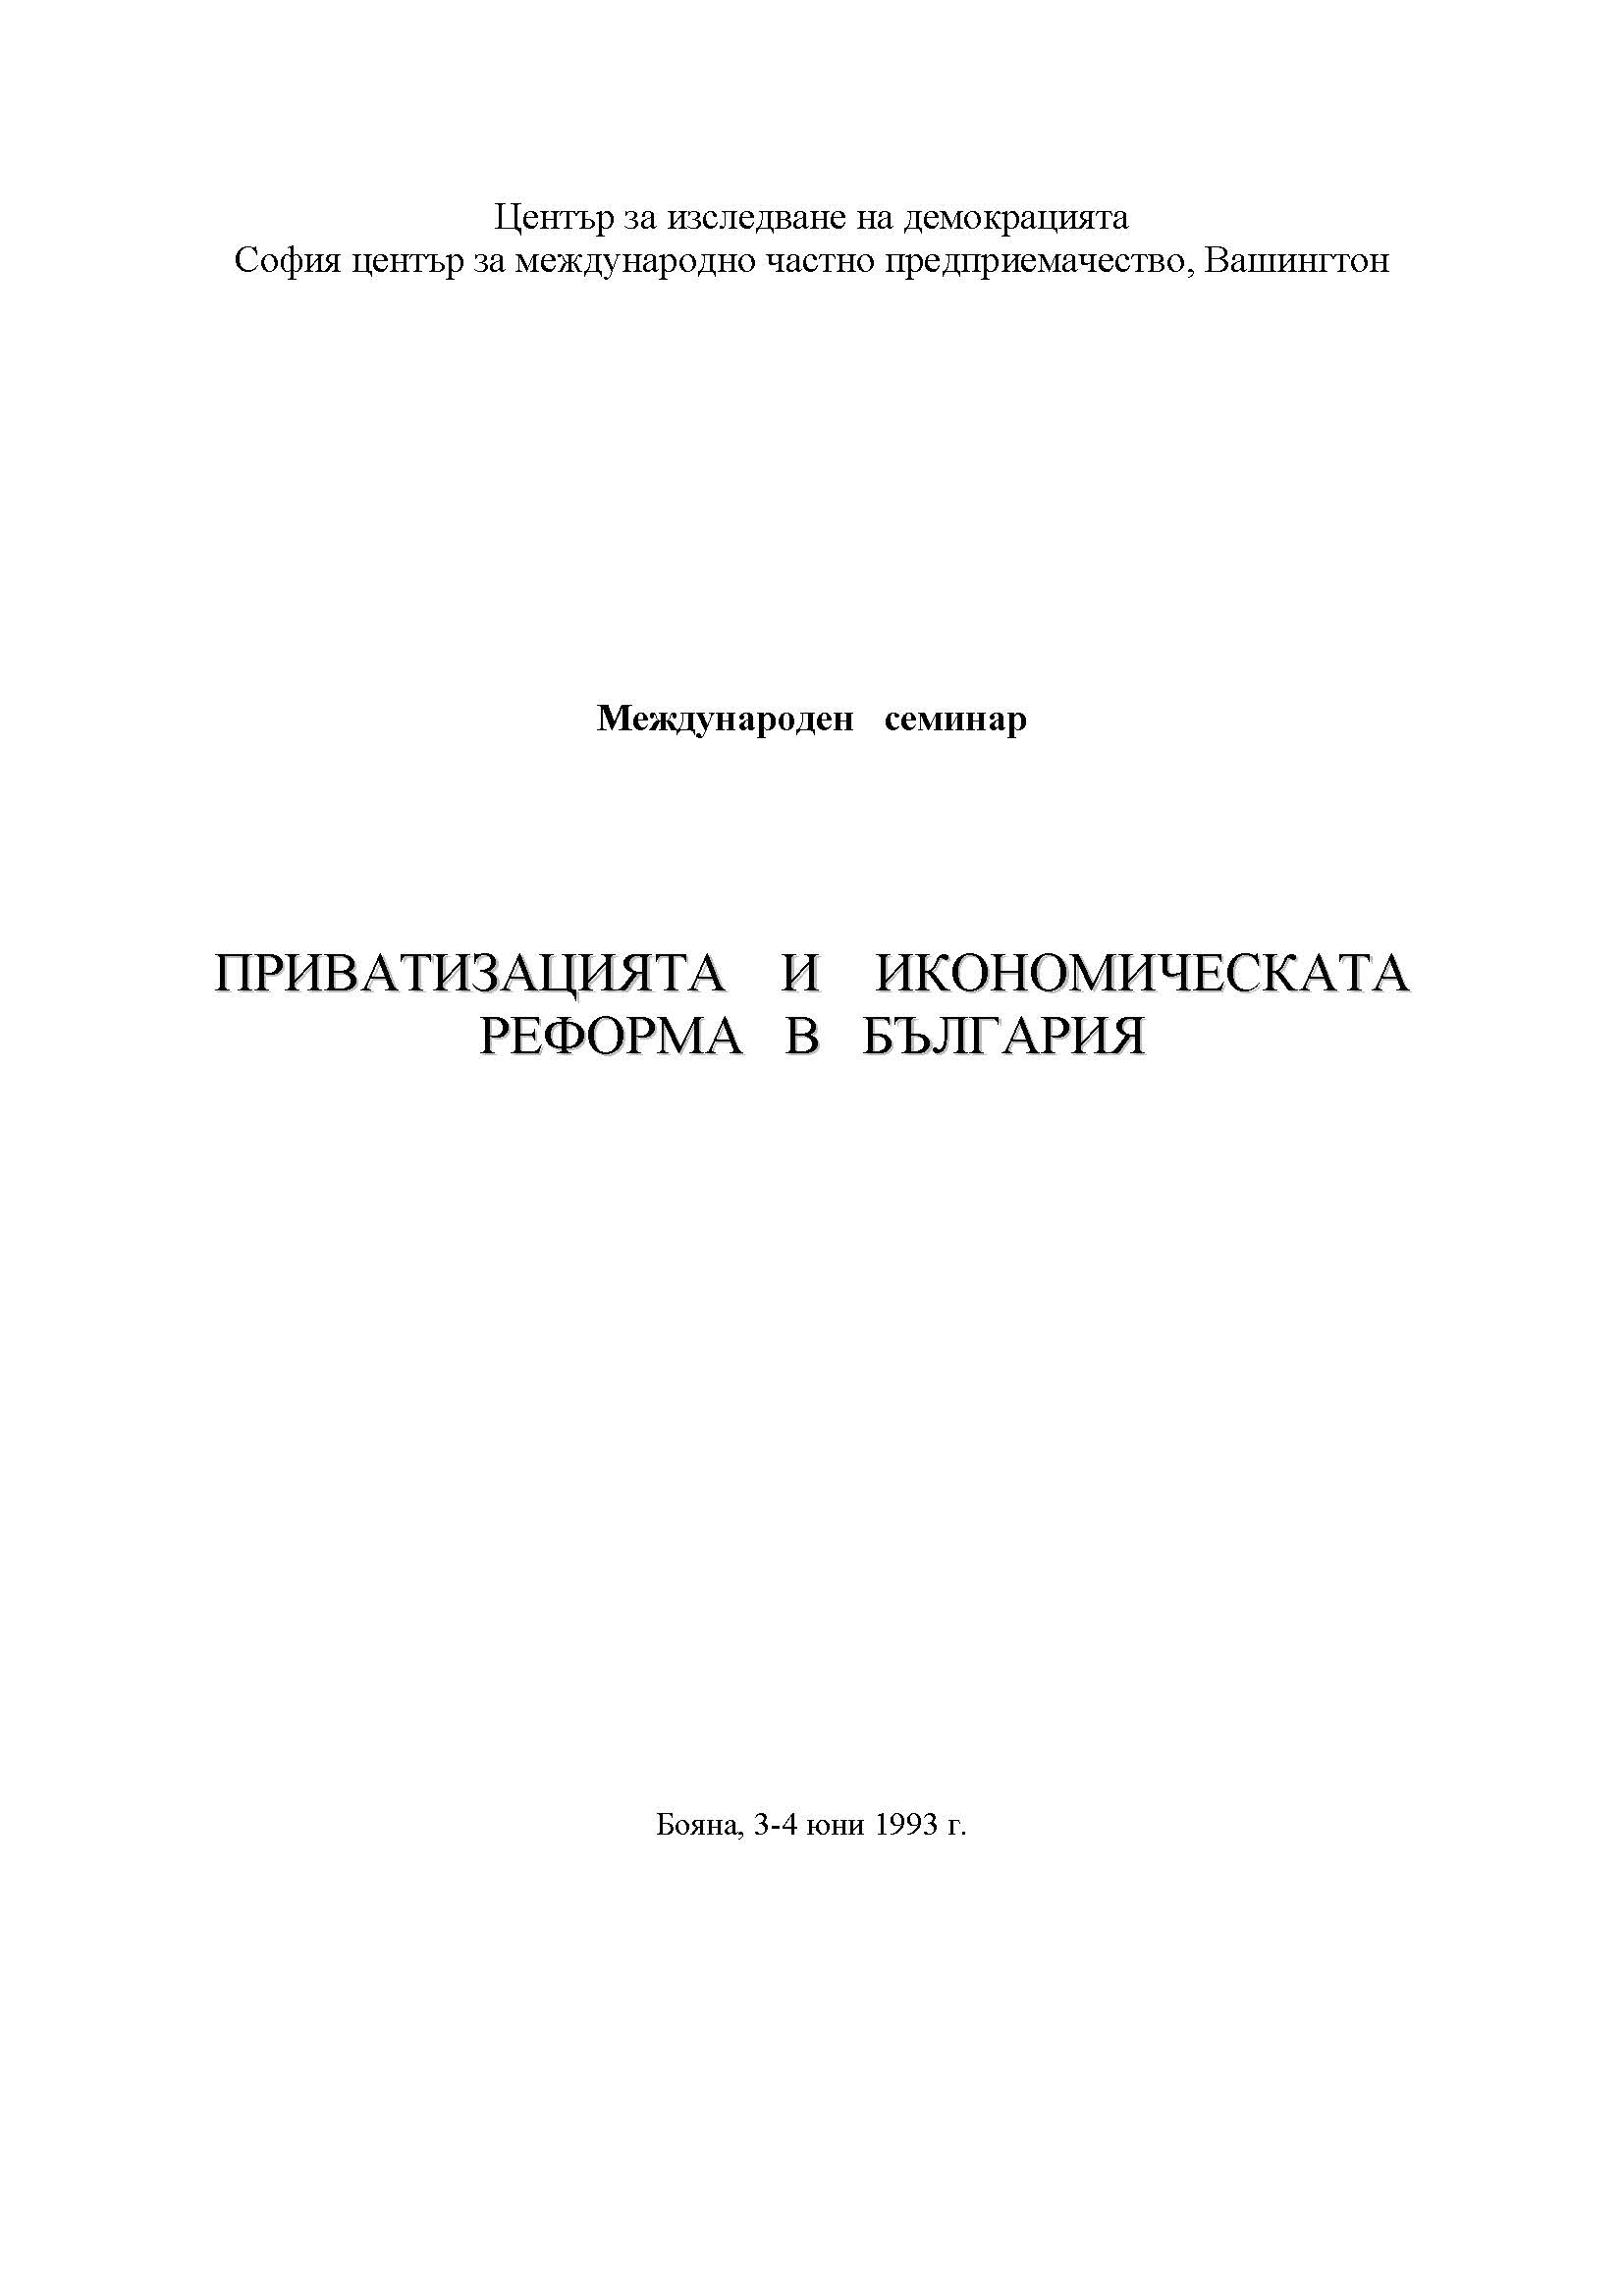 International Seminar: PRIVATIZATION AND ECONOMIC REFORM IN BULGARIA. Boyana, 3-4 June 1993 Cover Image